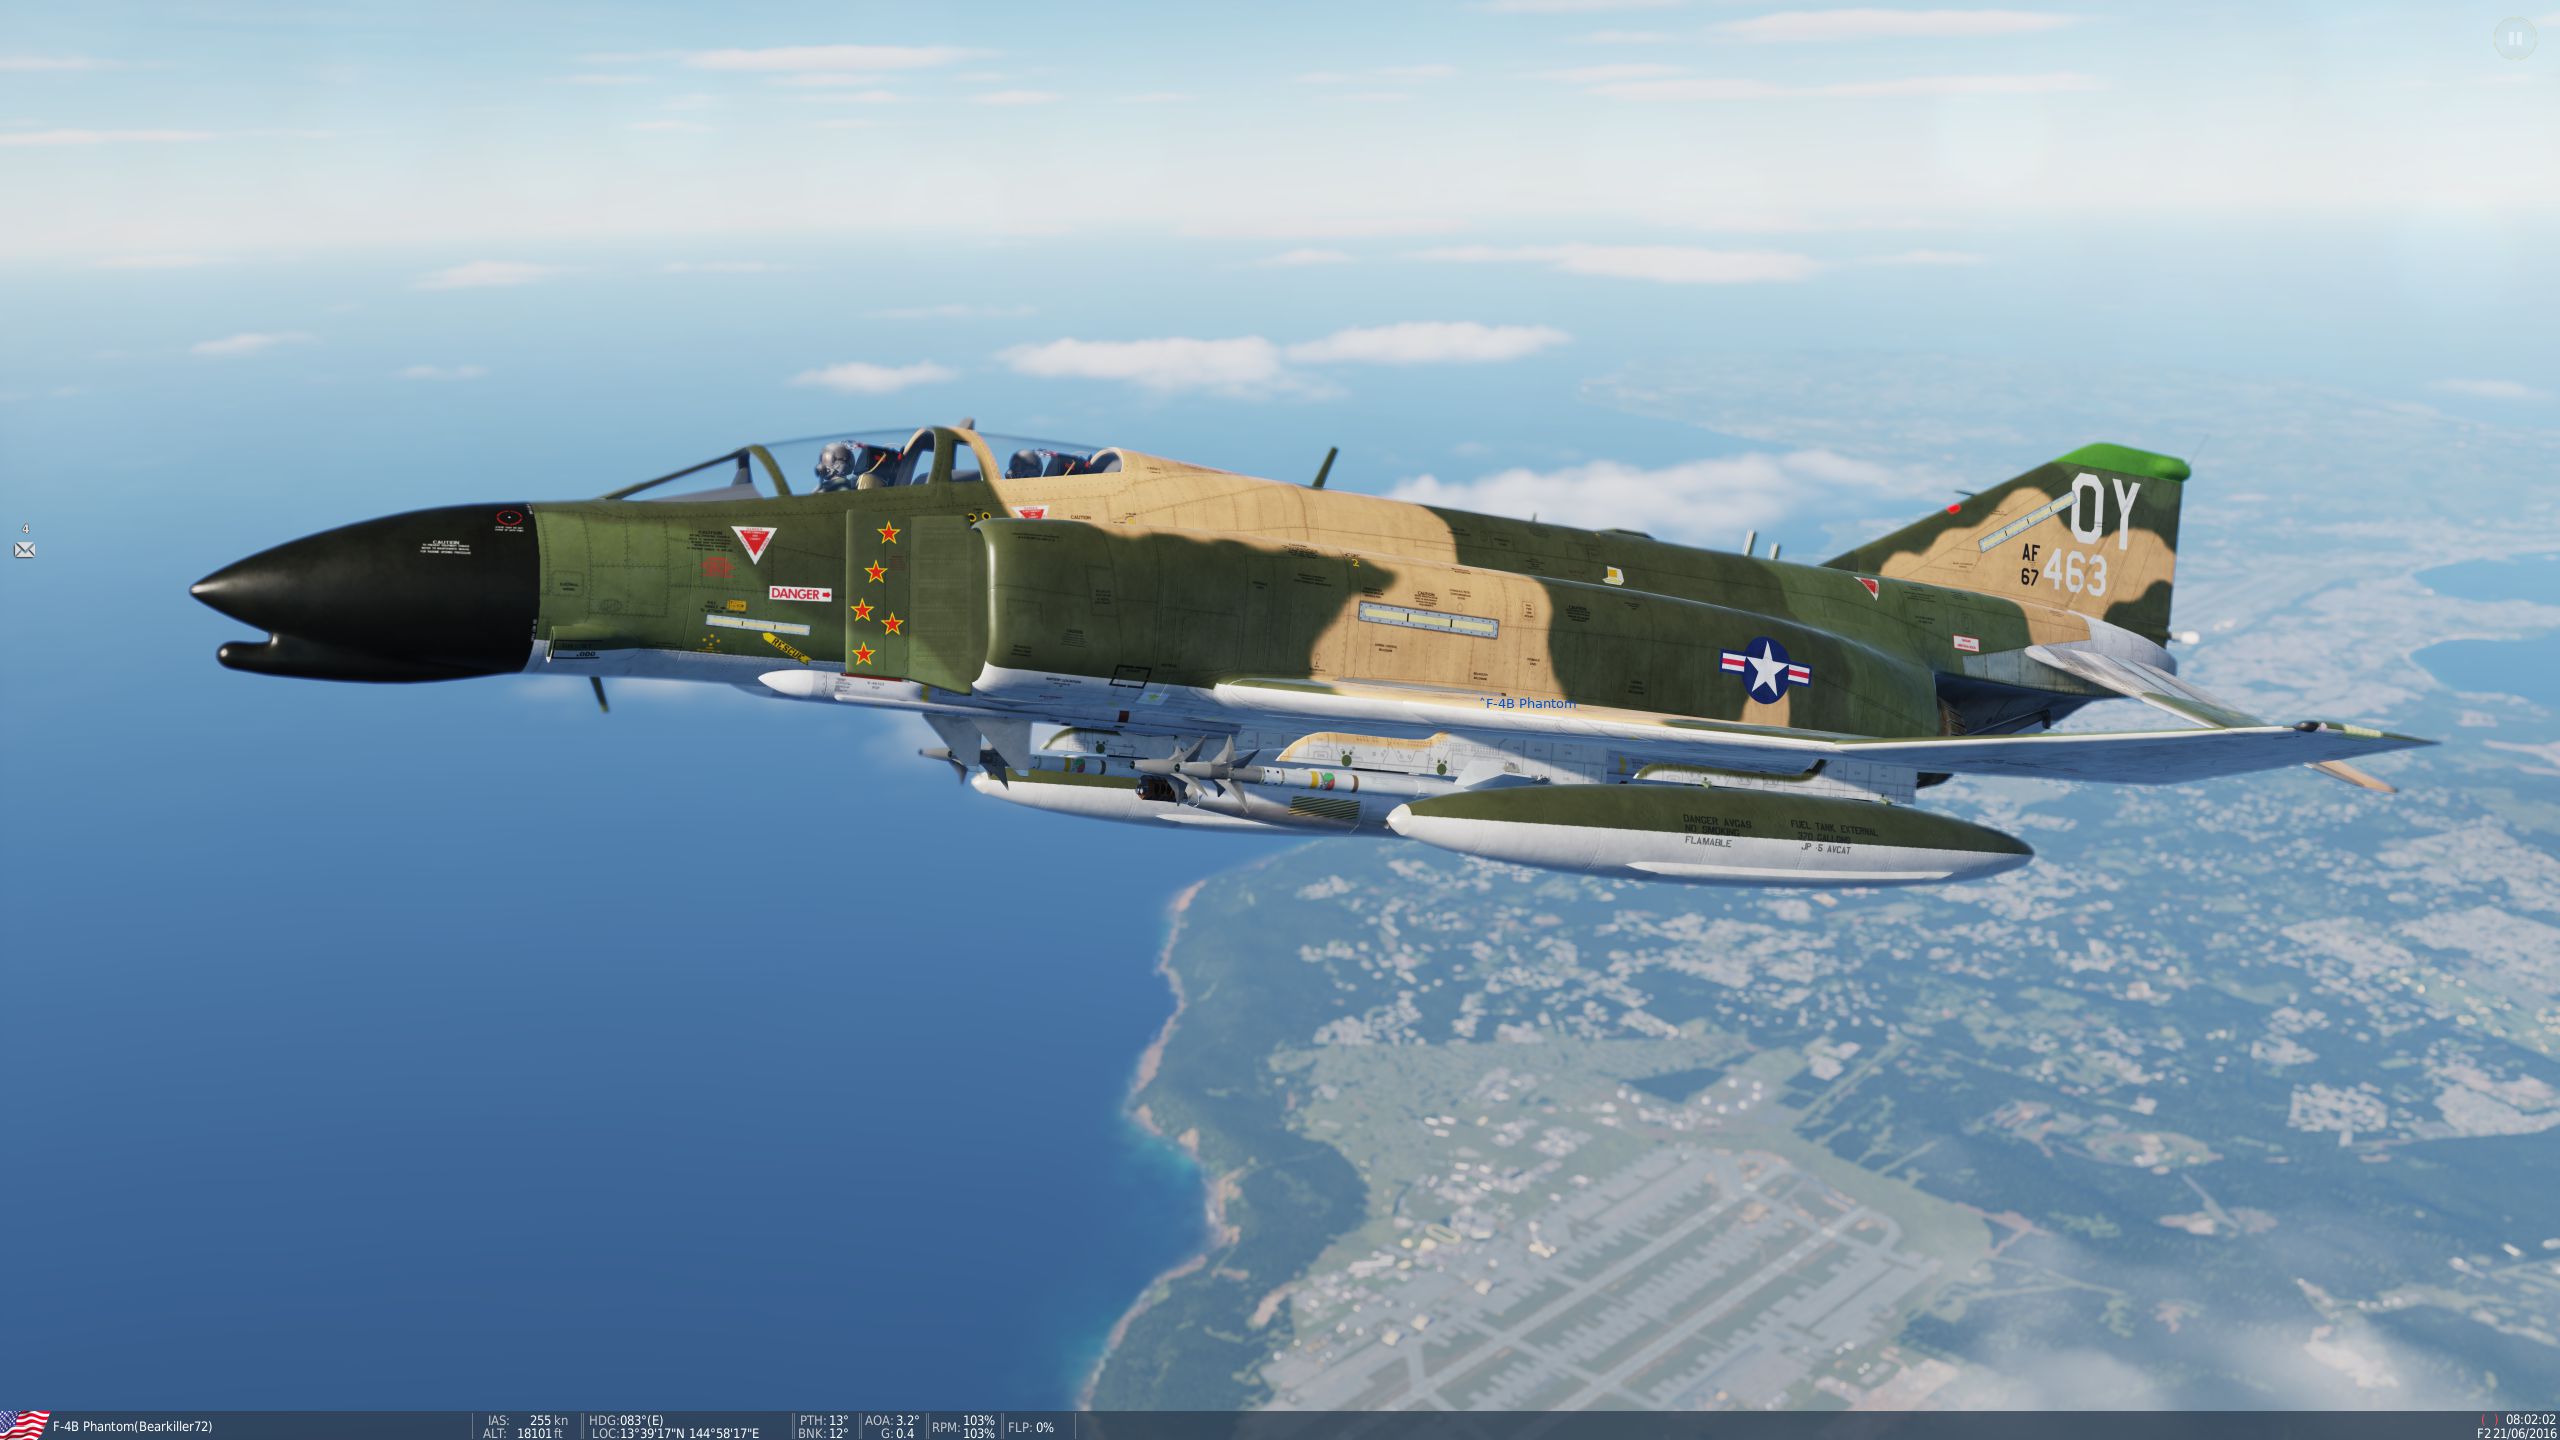 VSN F-4B Mod "MiG Killer" 555TFS (Ritchie/DeBellevue)